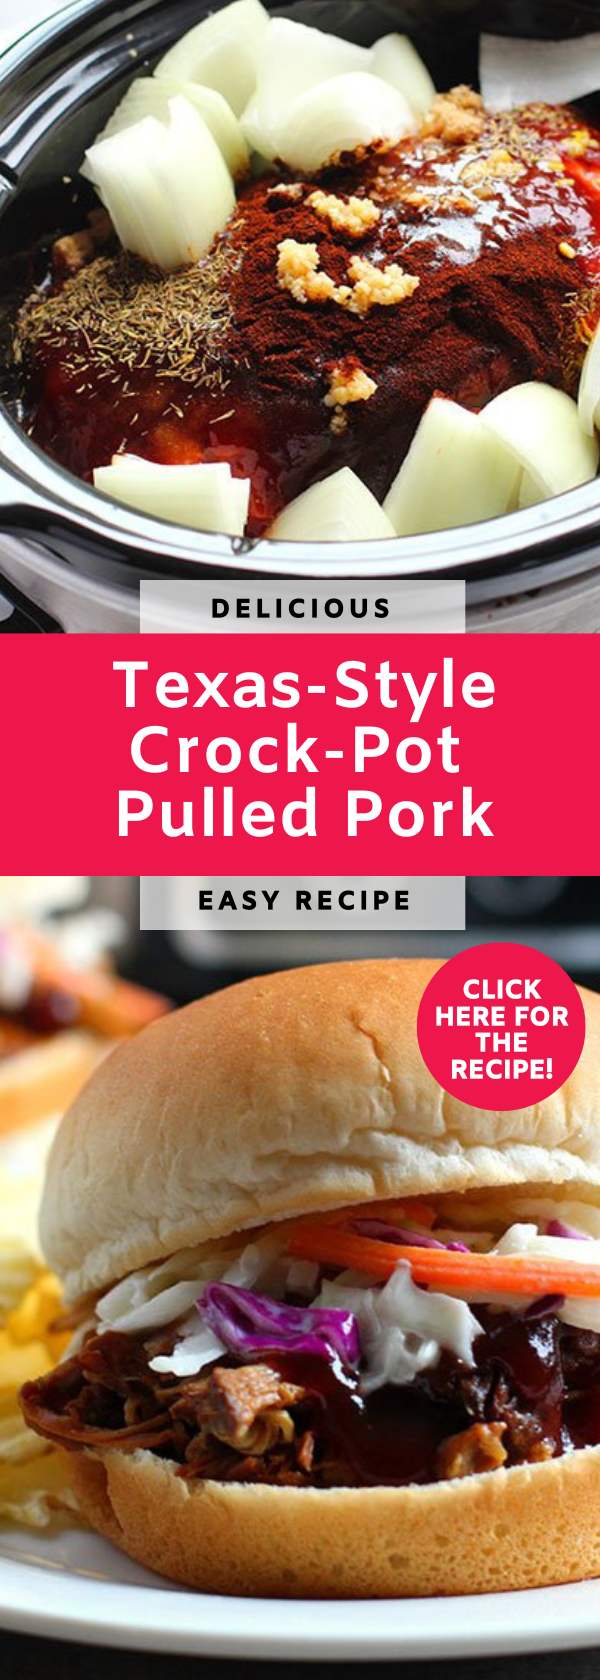 texas style pulled pork easy crockpot recipe fountainof30